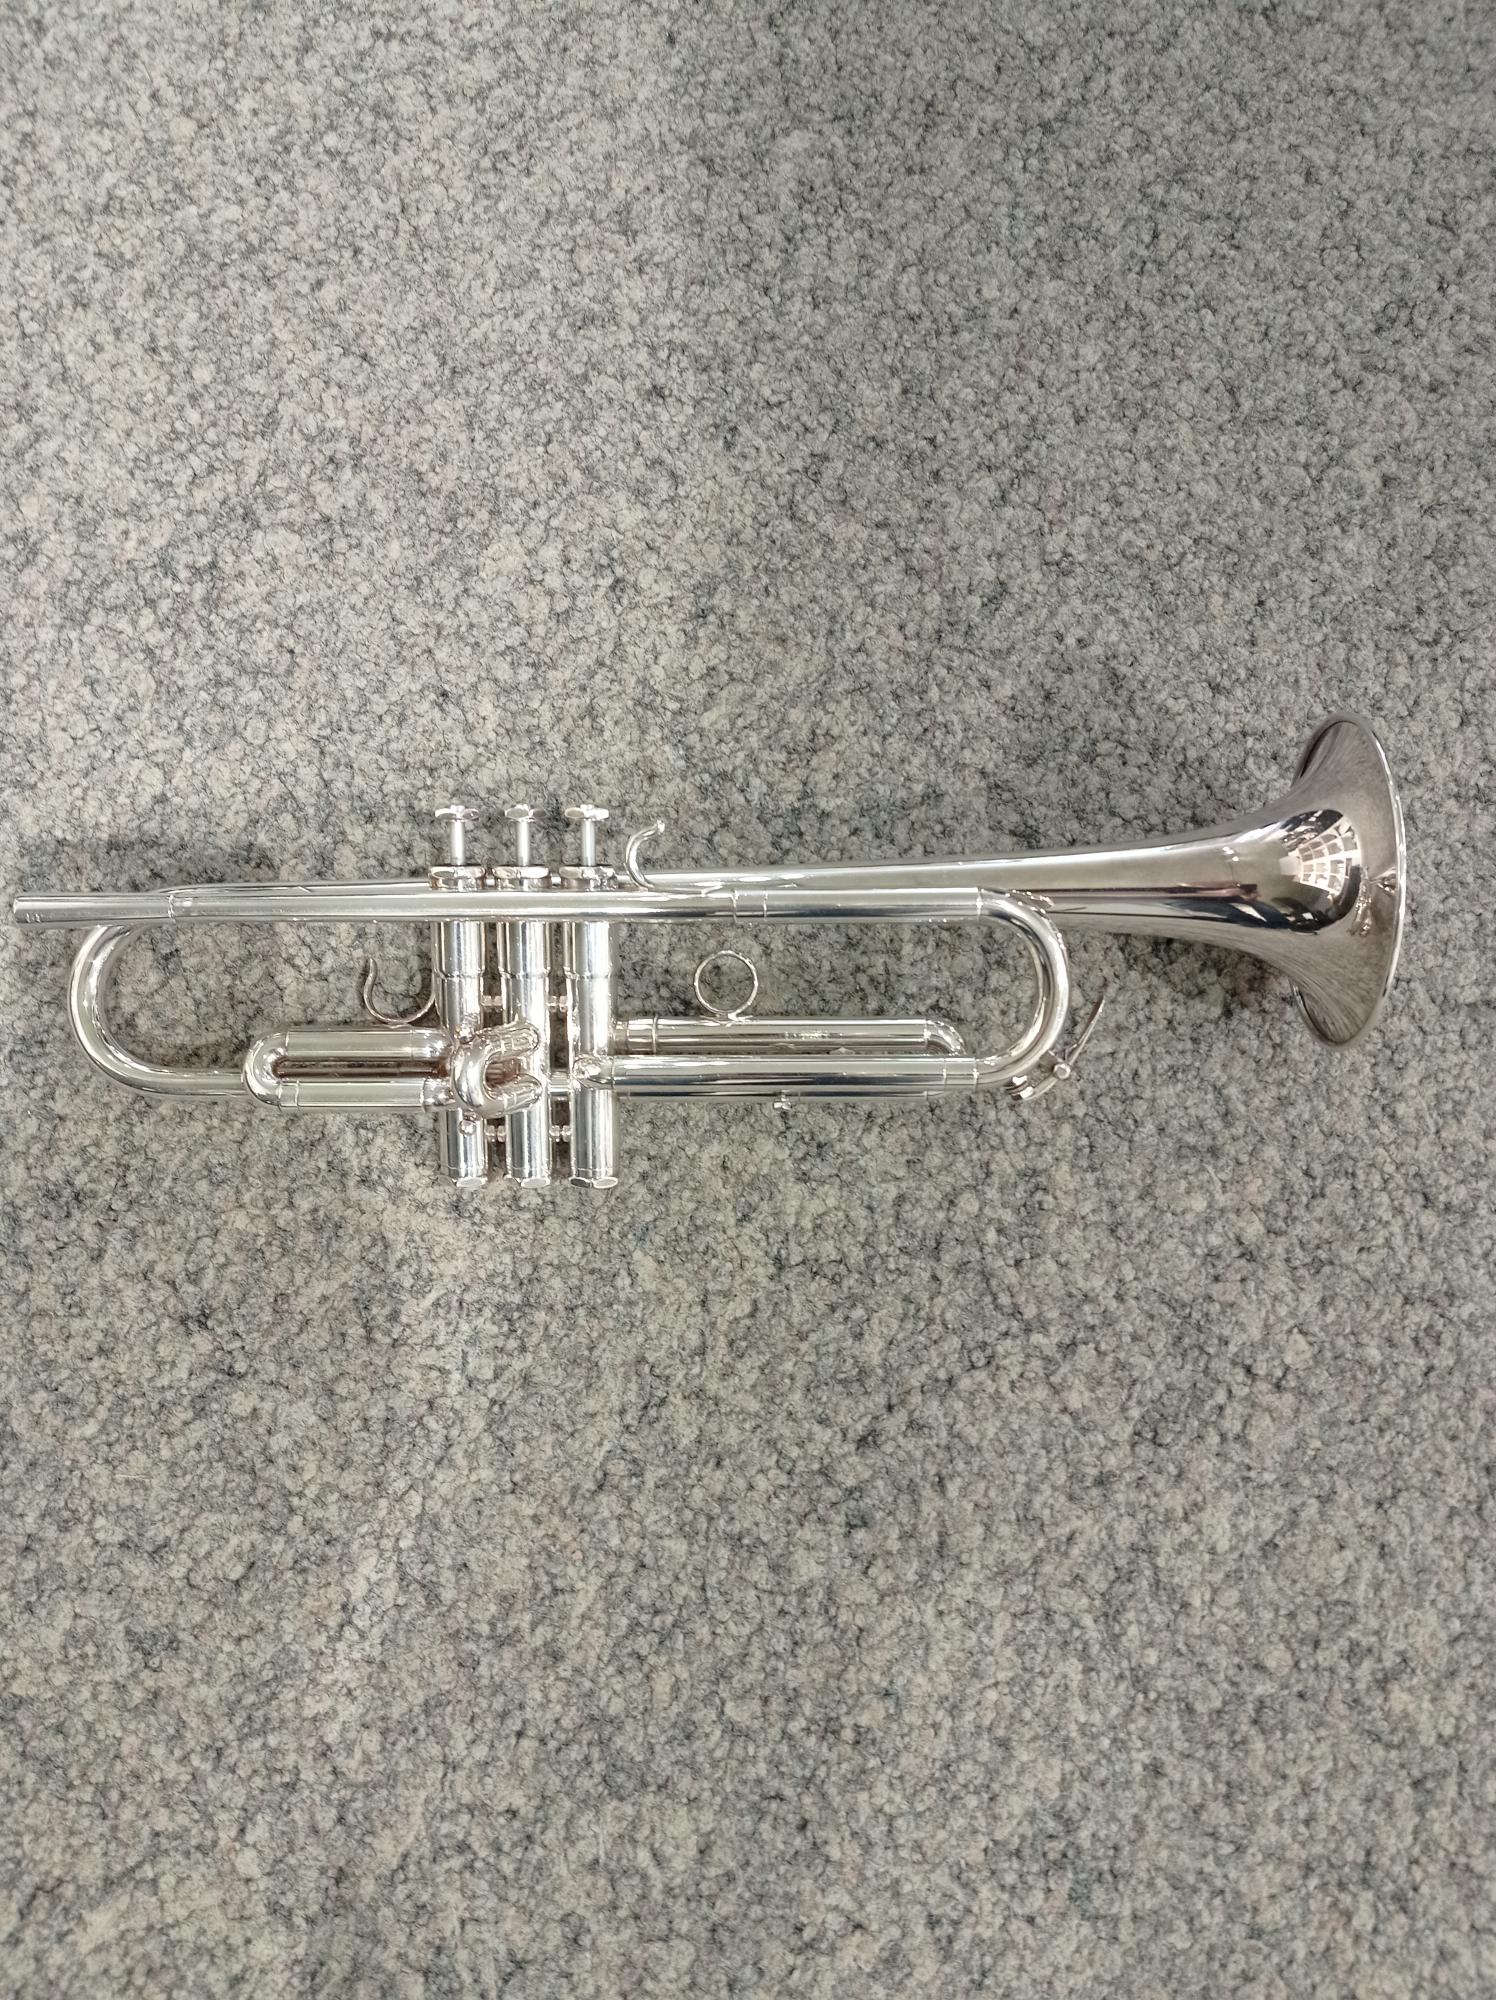 B Trompete Schilke Mod. B1 gebr.